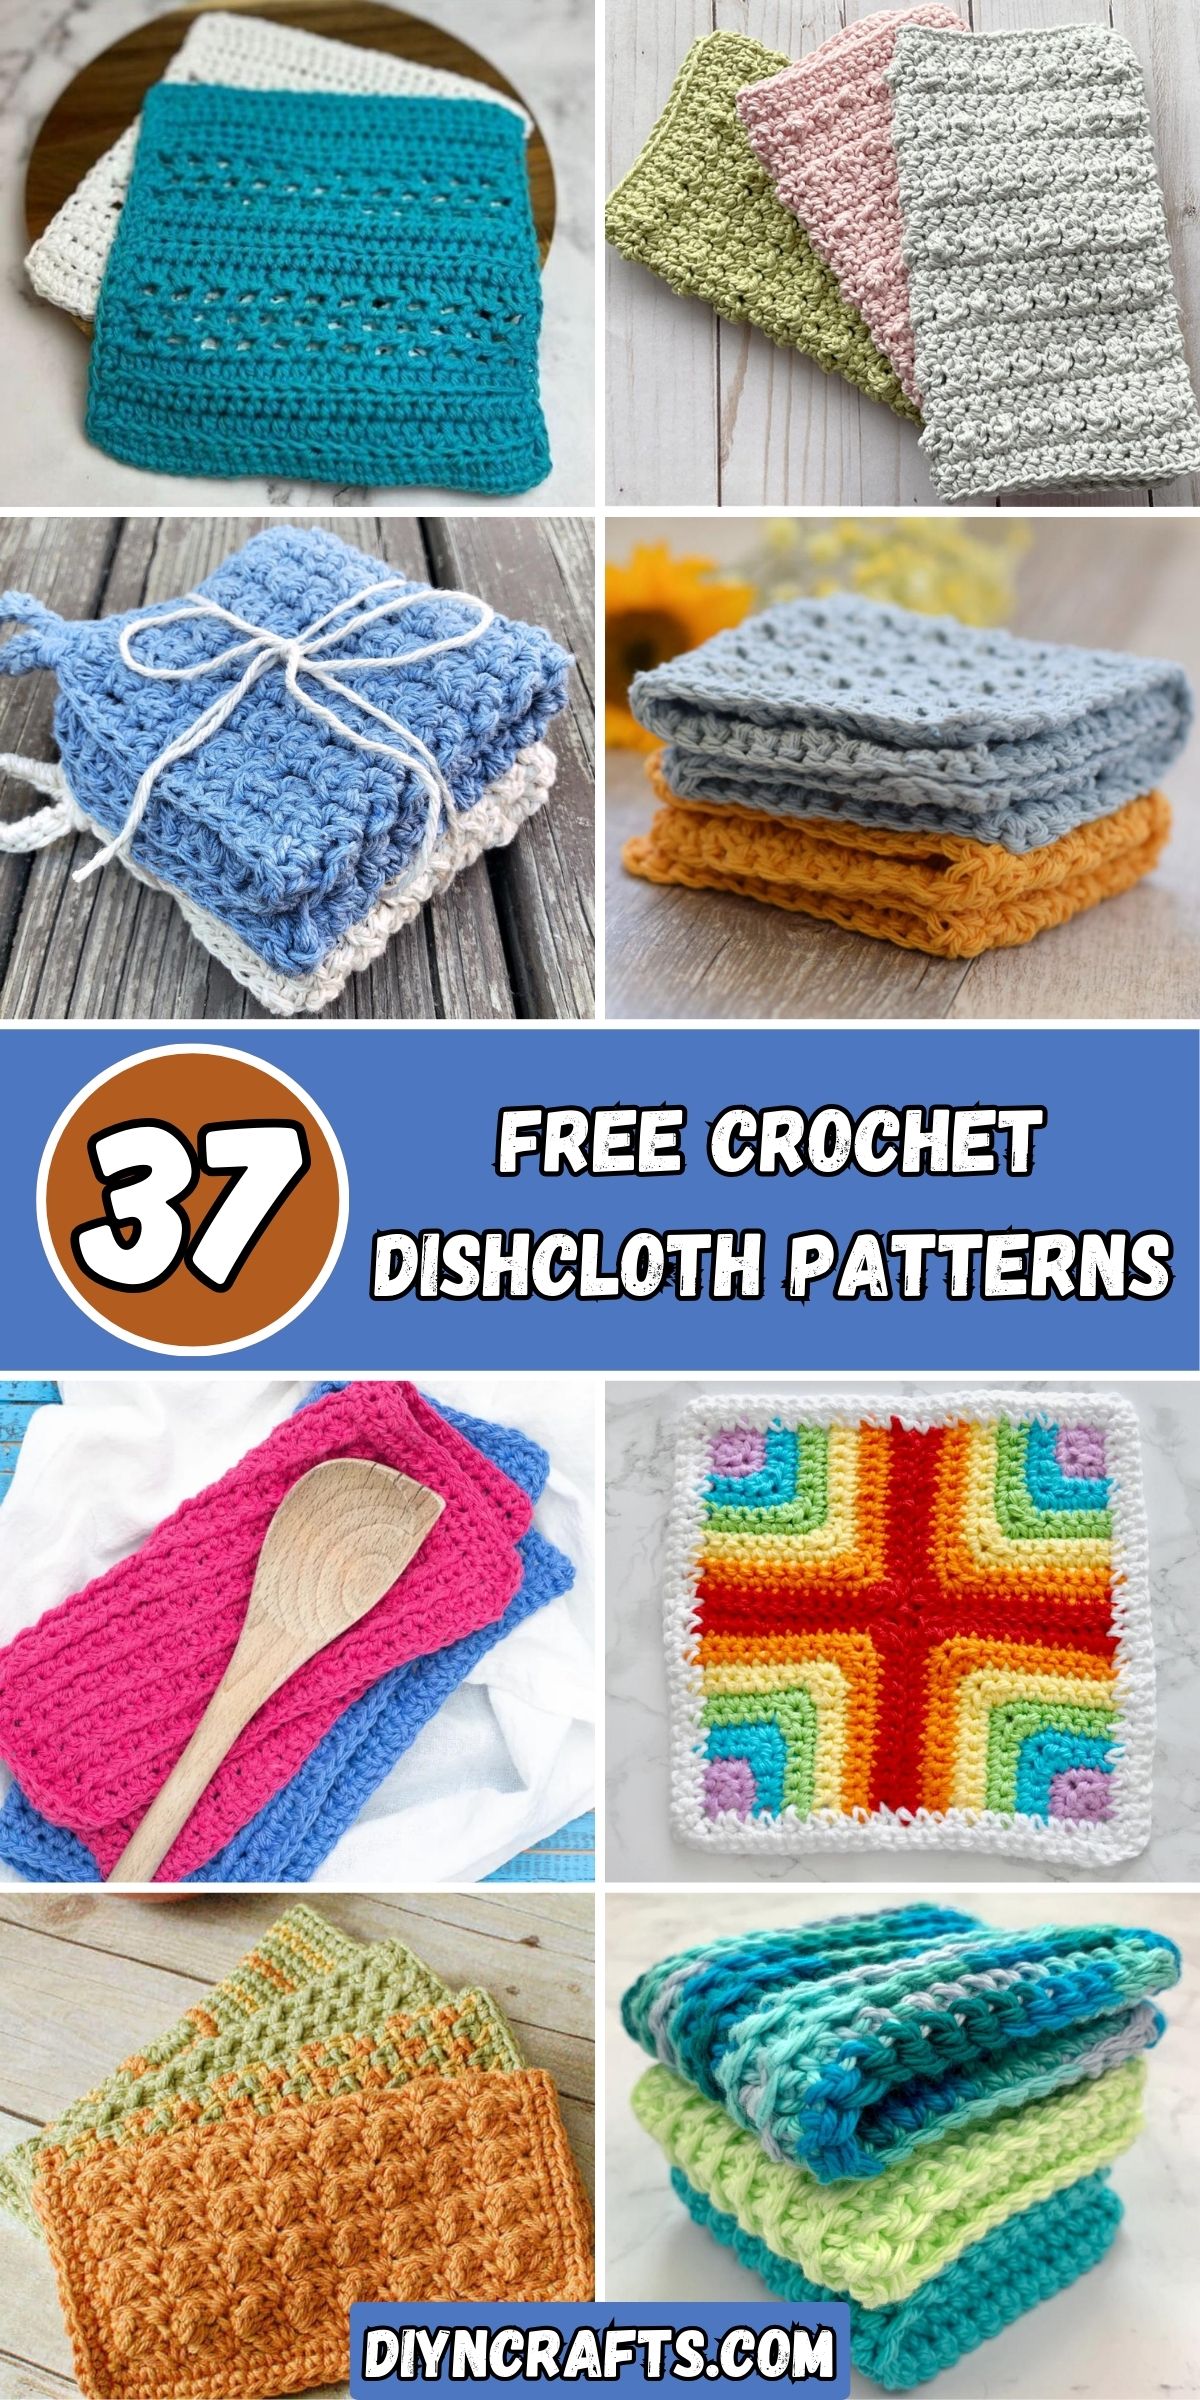 37 Free Crochet Dishcloth Patterns collage.